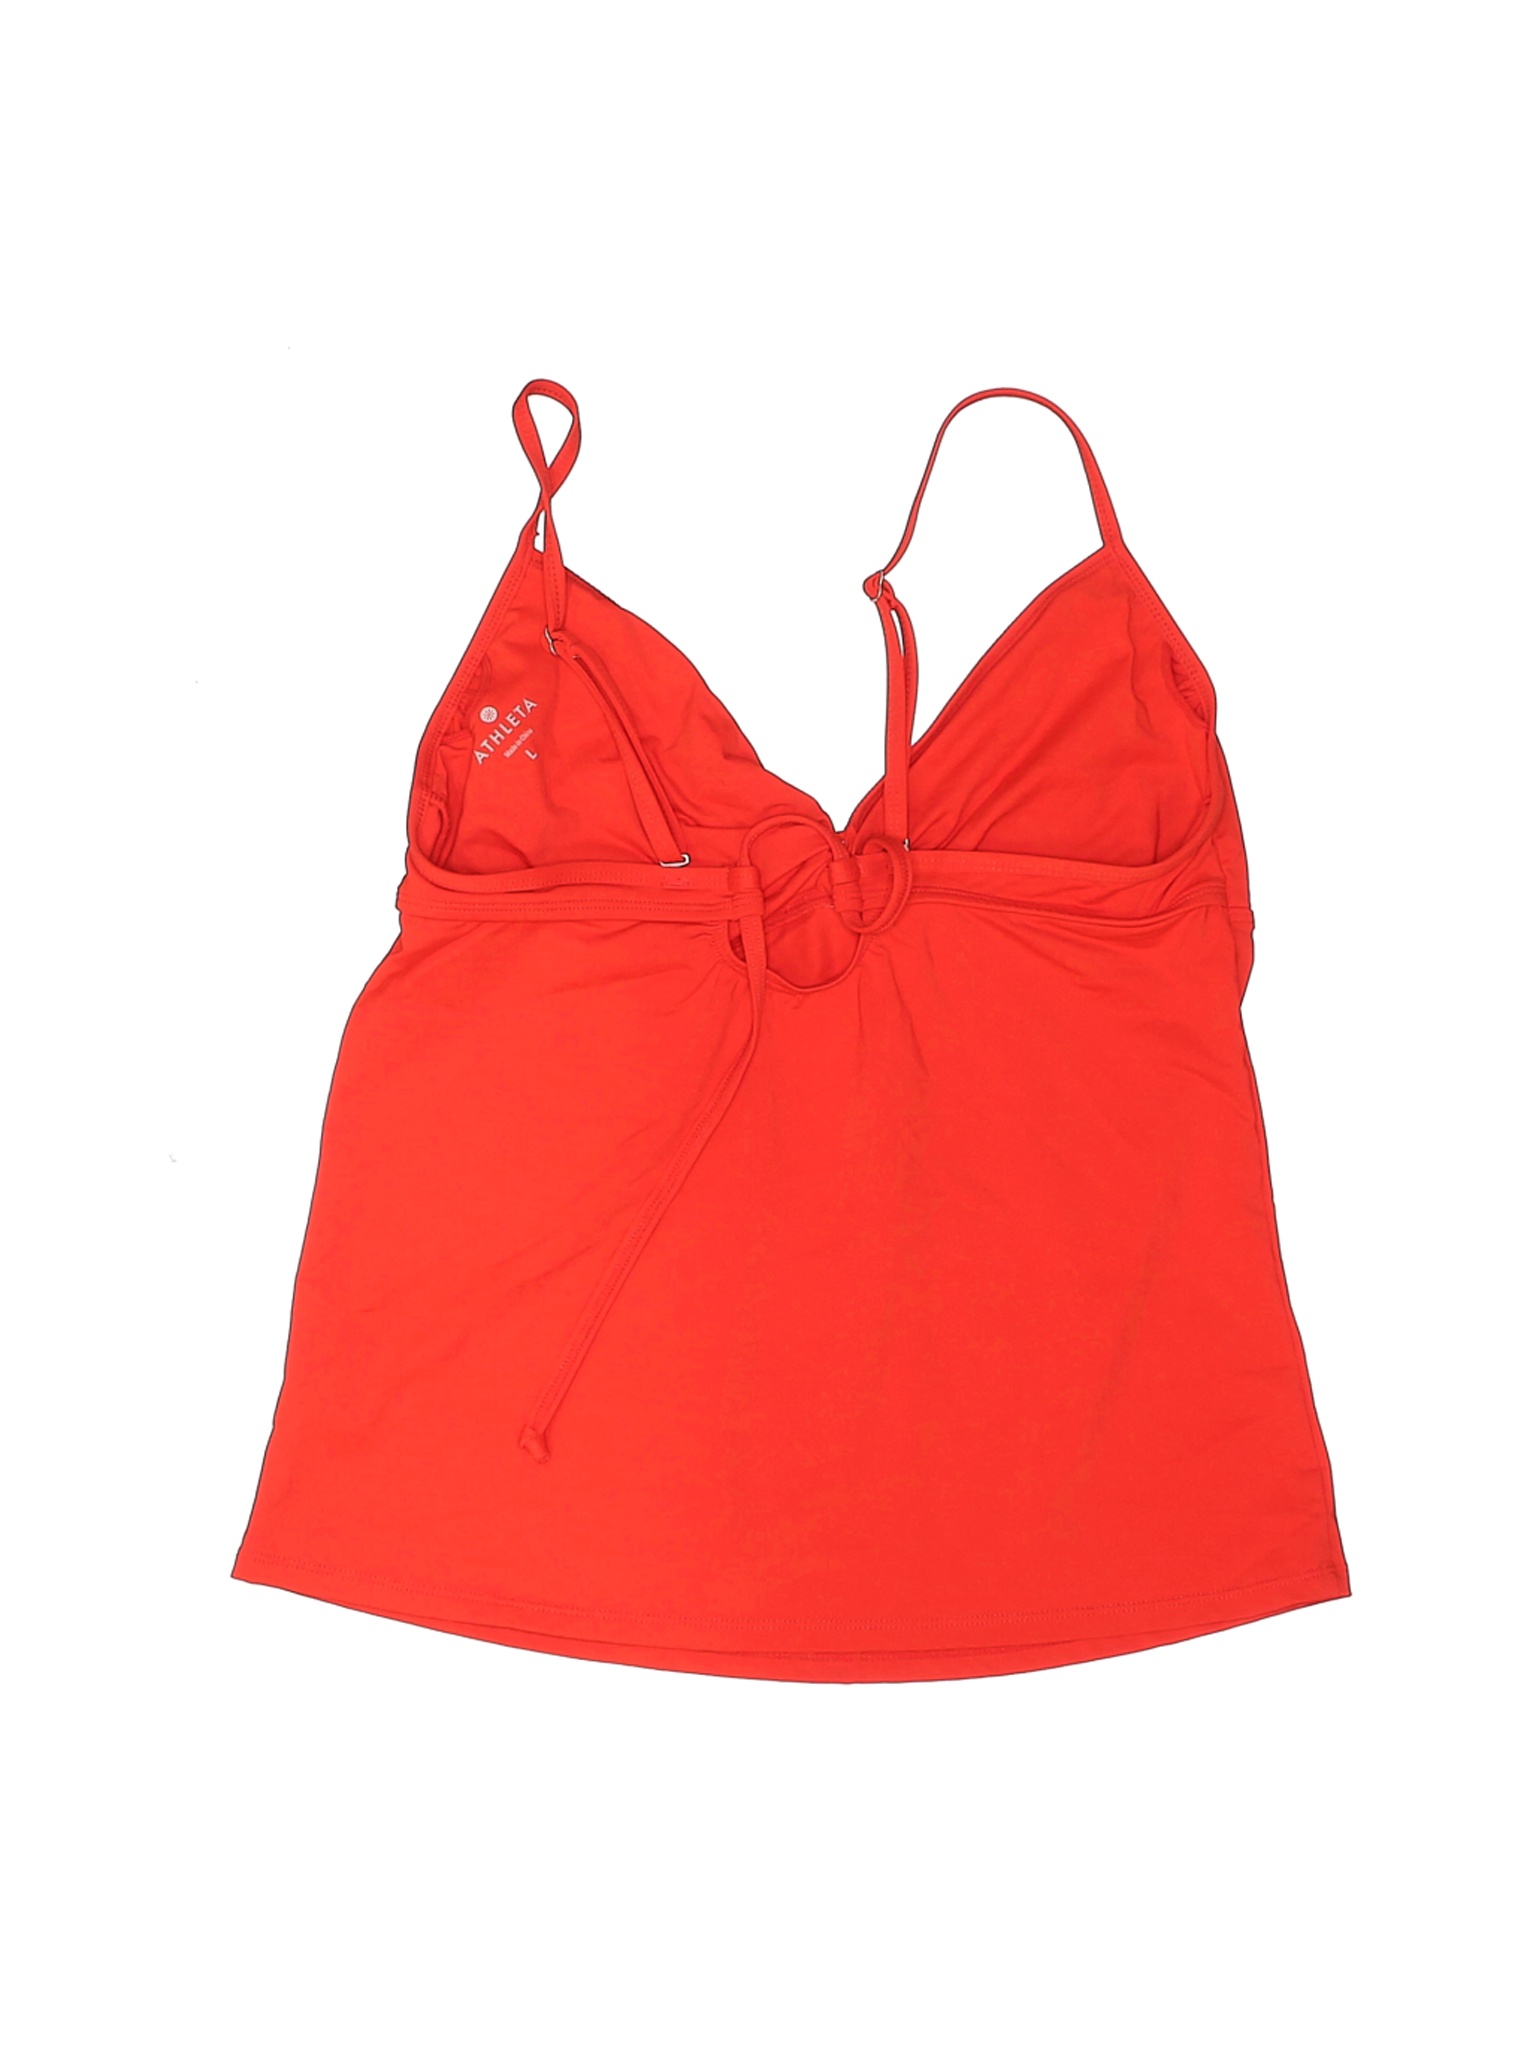 Athleta Women Orange Swimsuit Top L | eBay